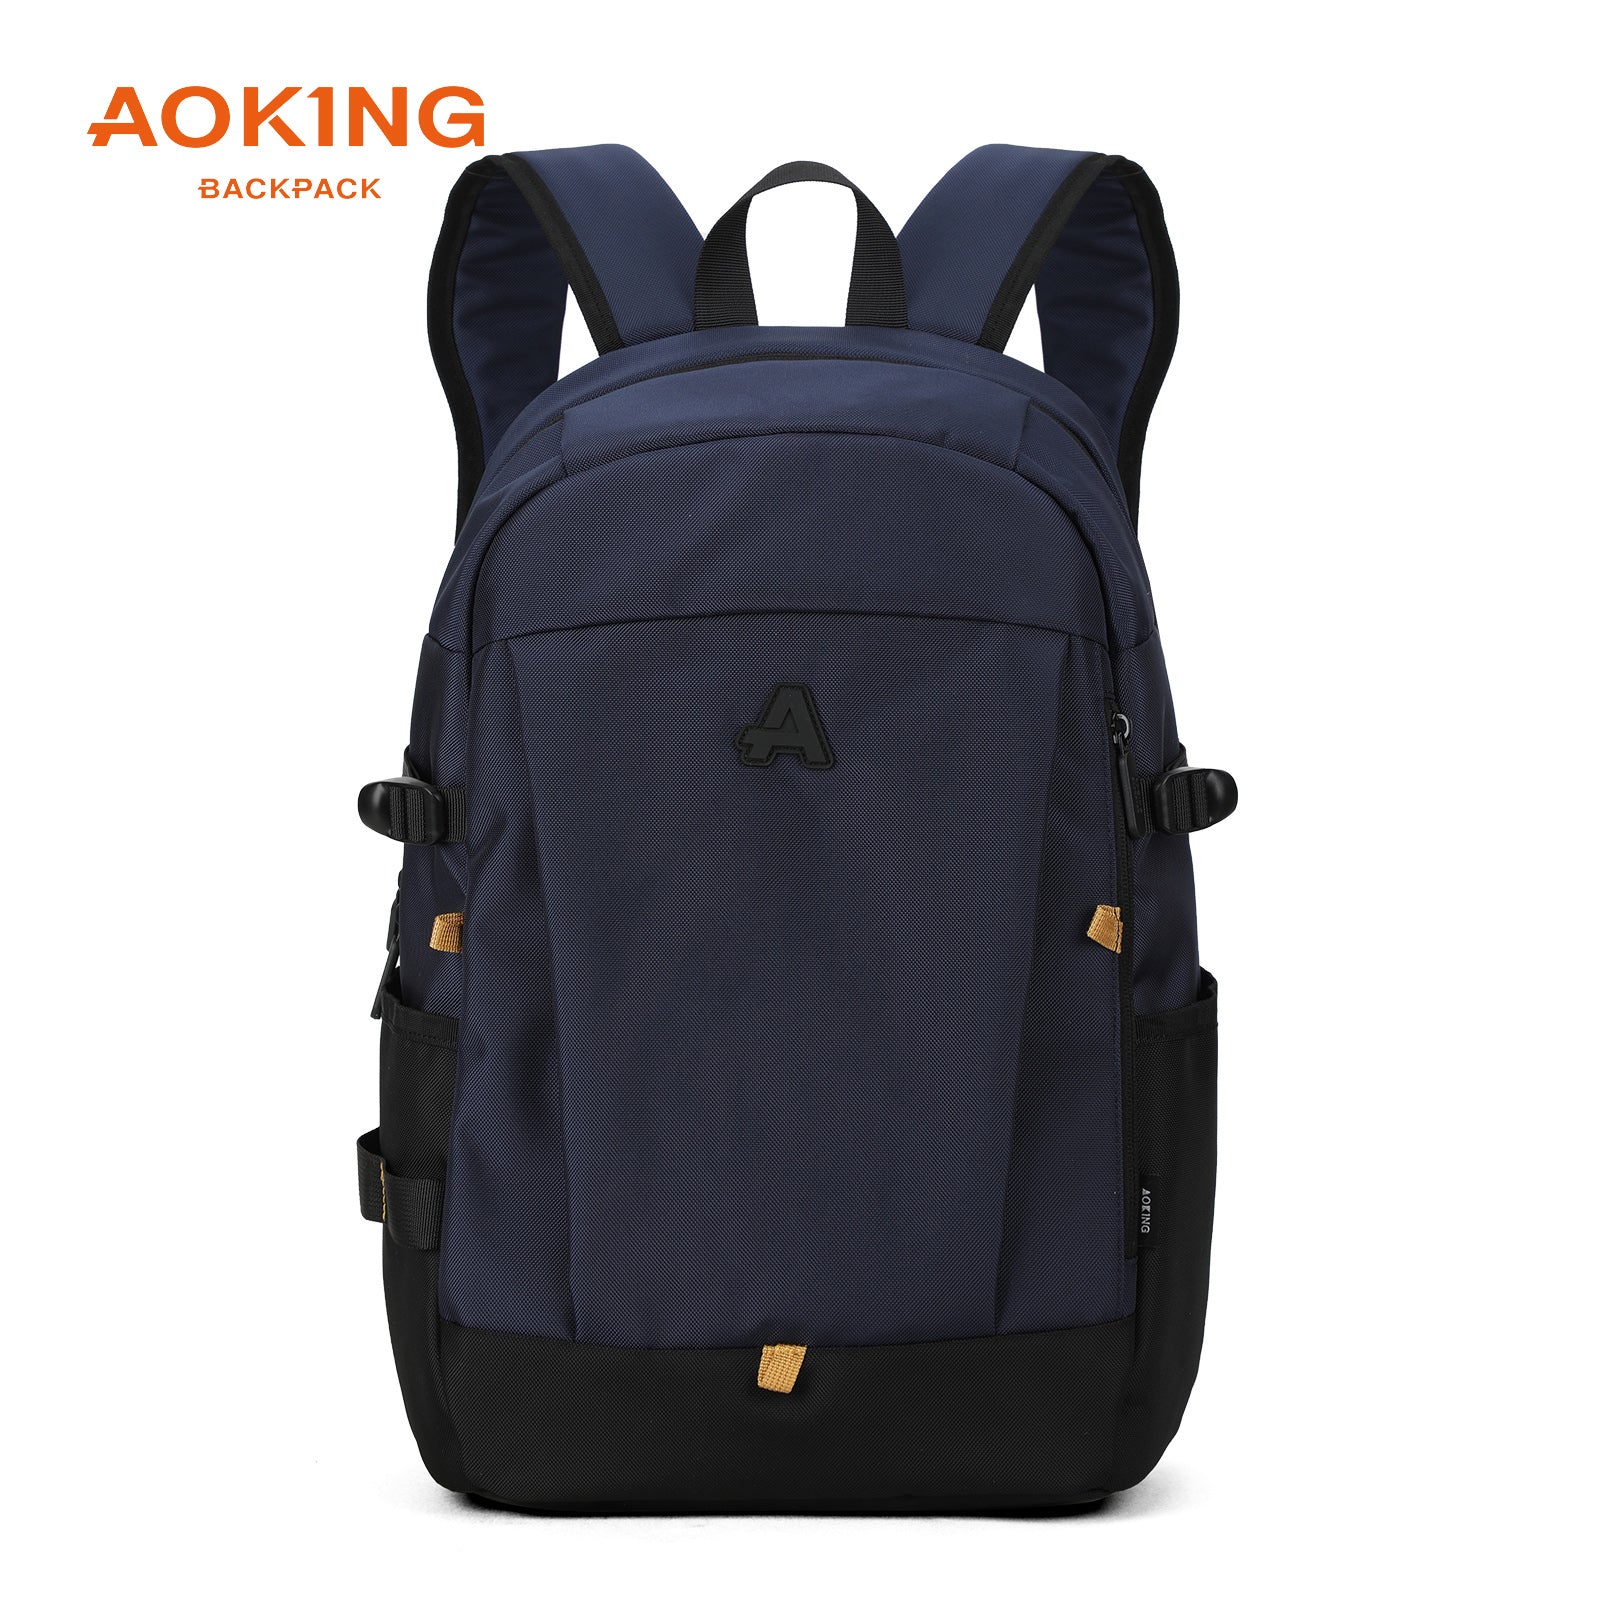 Aoking Backpack Casual Backpack Student Bag XN3027-10